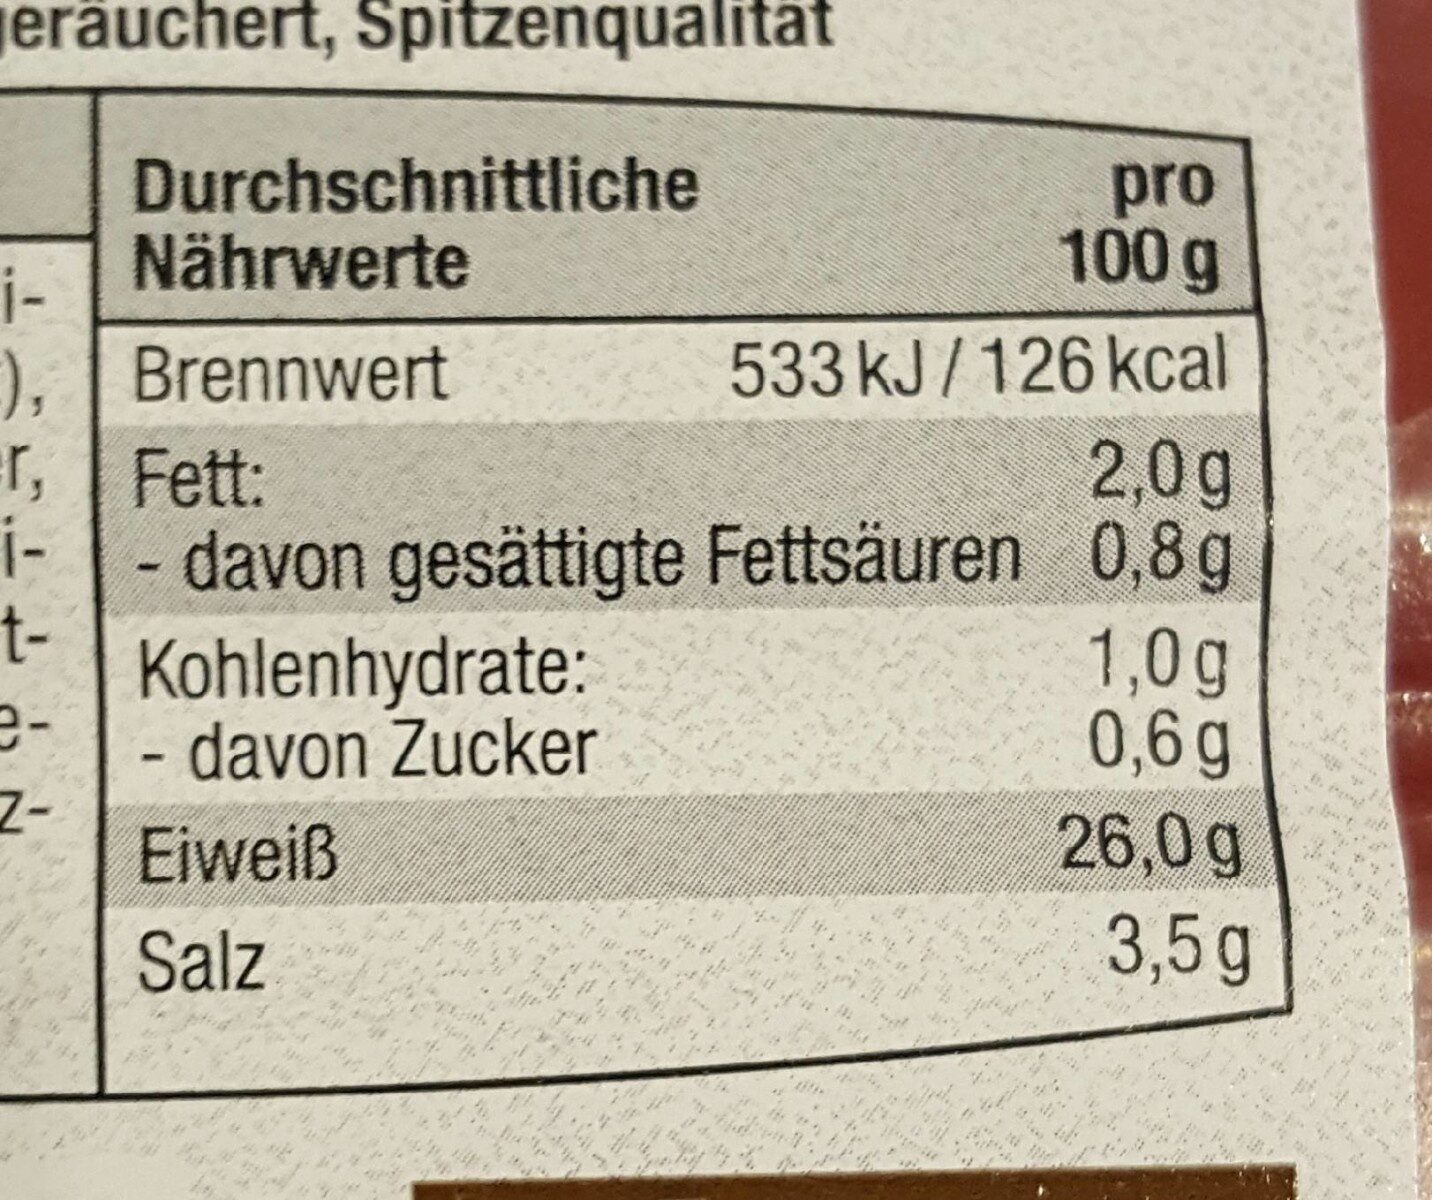 Lachsschinken - Nutrition facts - en